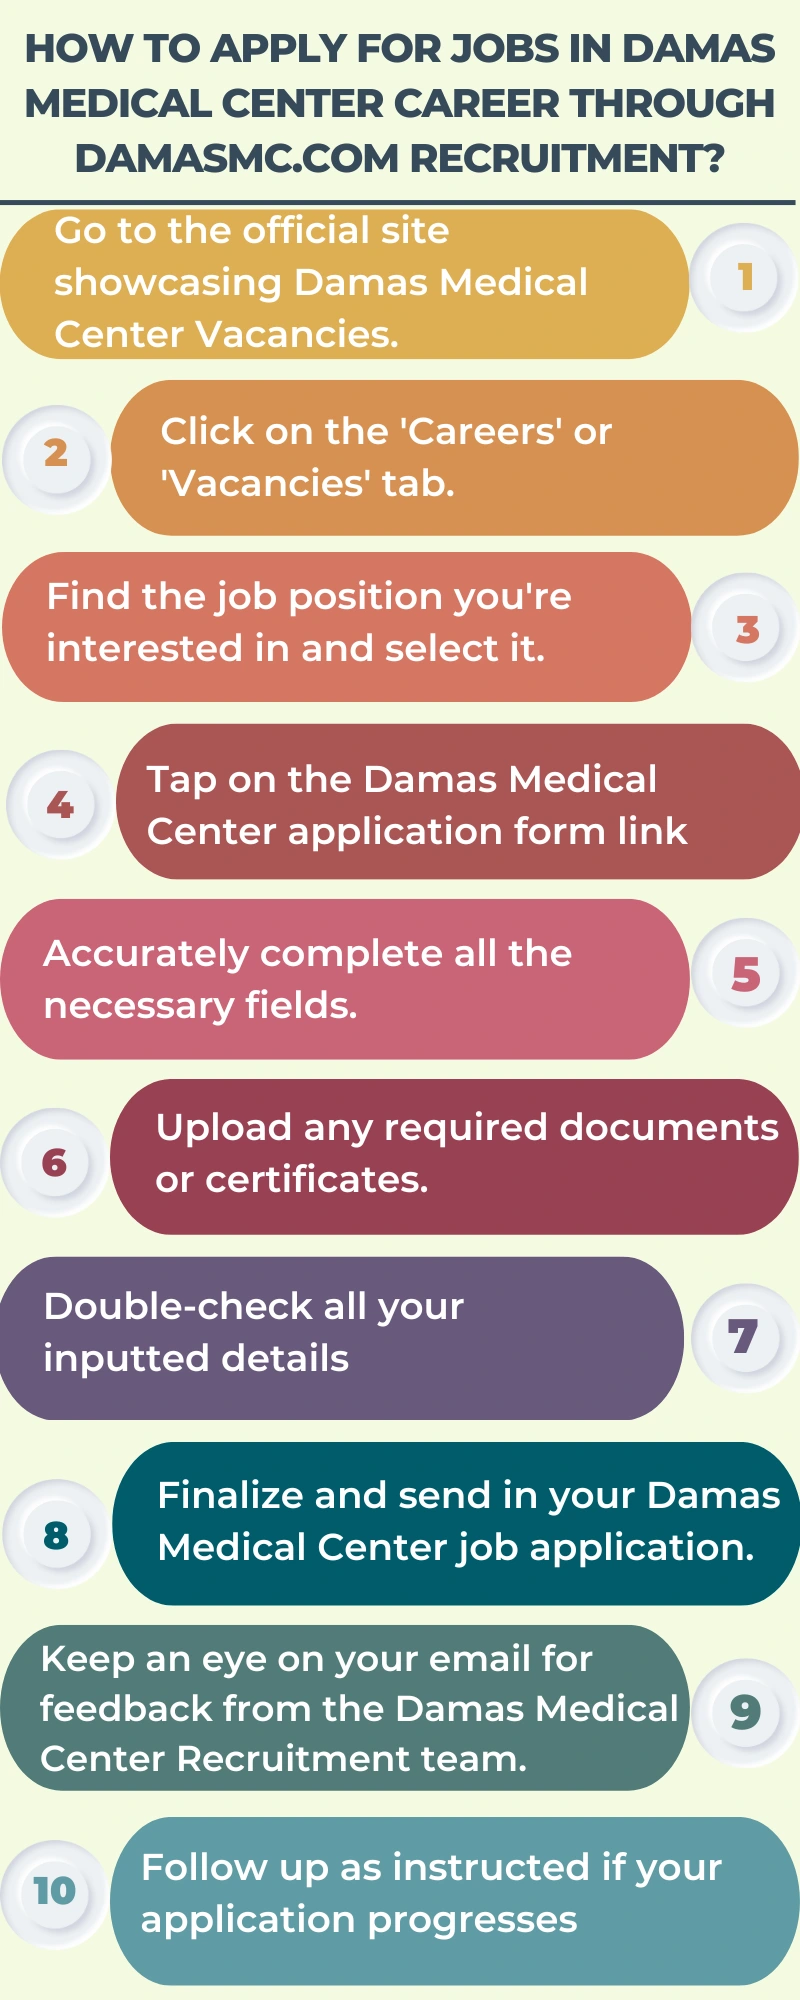 How to Apply for Jobs in Damas Medical Center Career through damasmc.com recruitment?